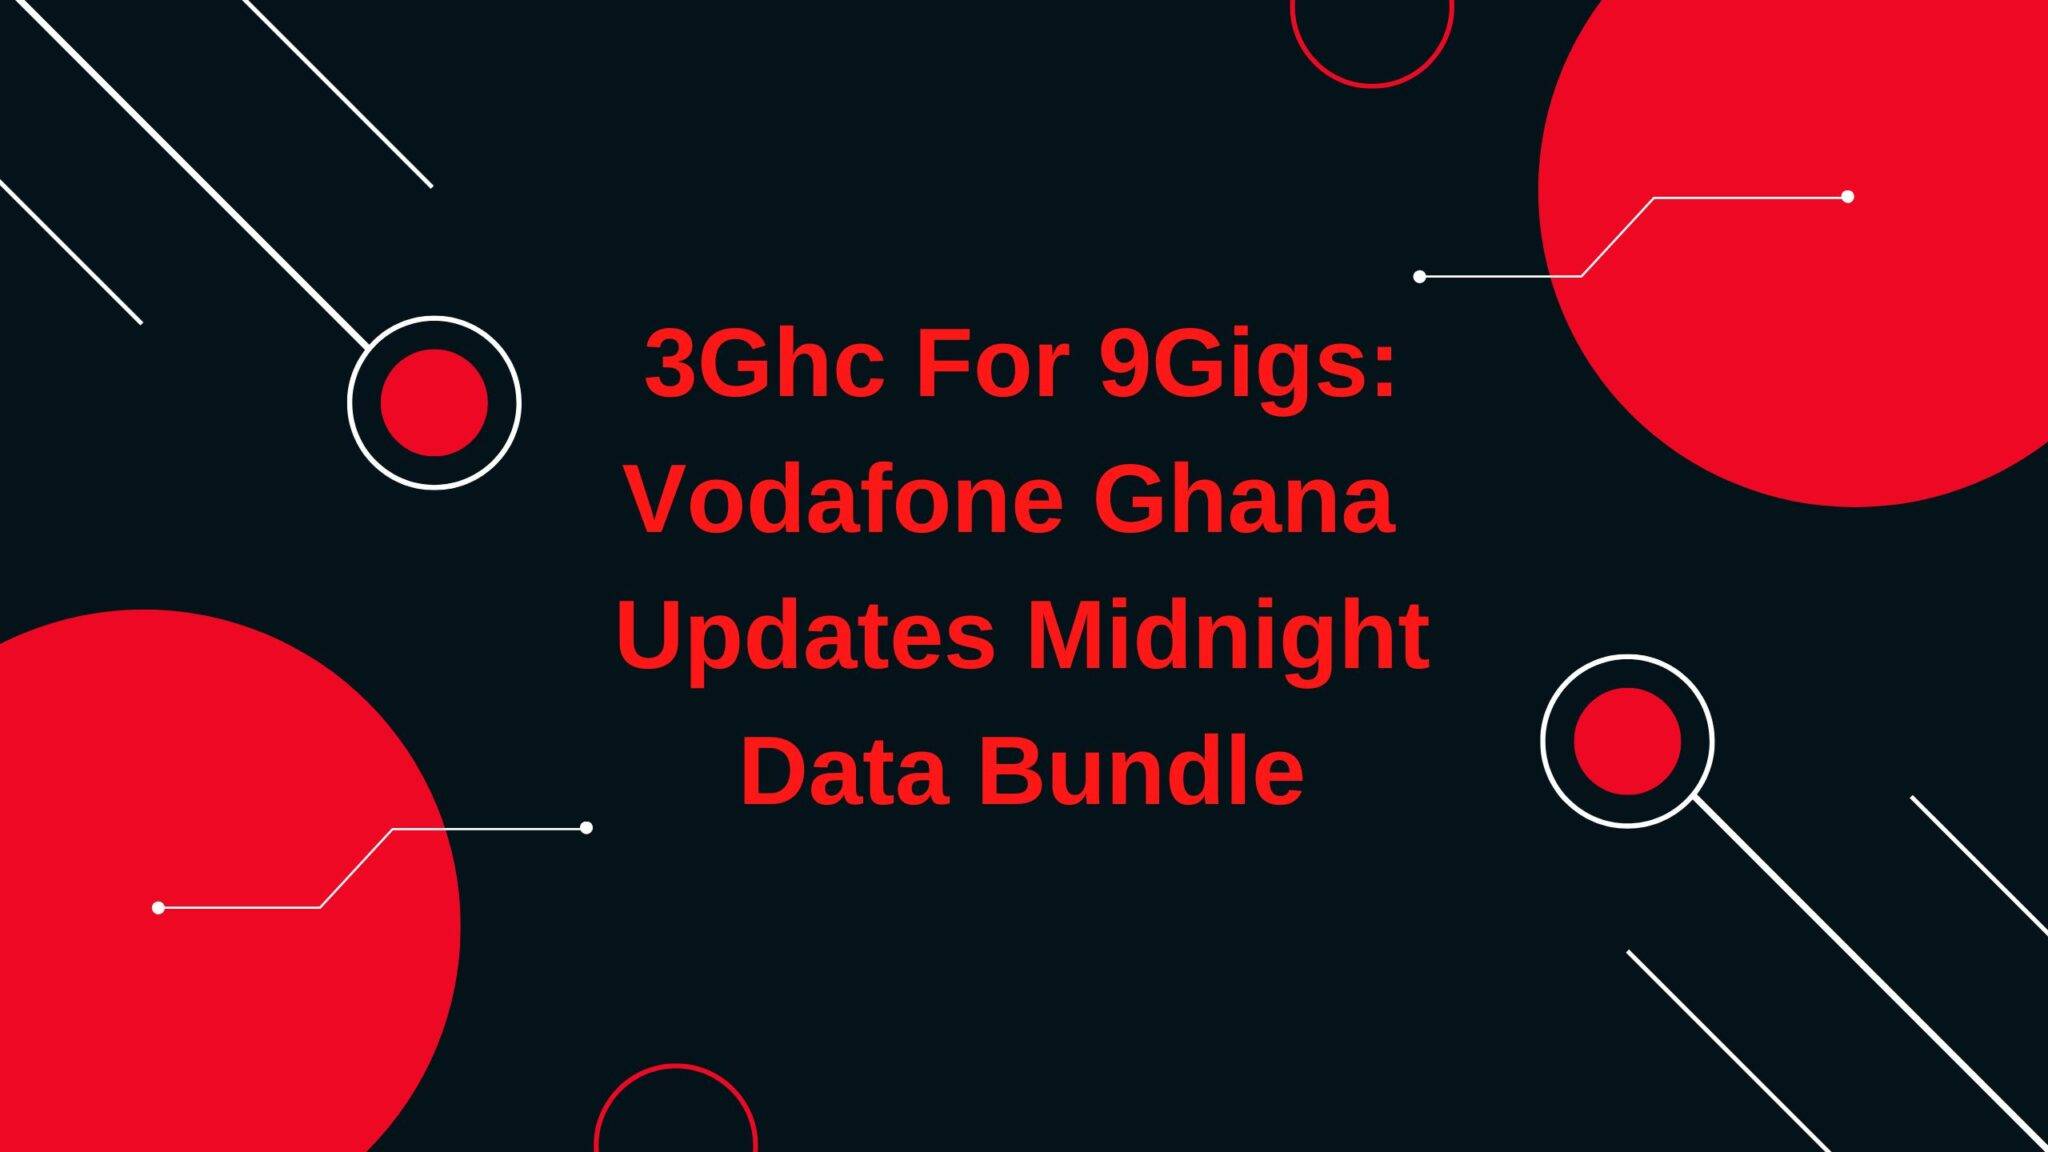 3Ghc For 9Gigs: Vodafone Ghana Updates Midnight Data Bundle